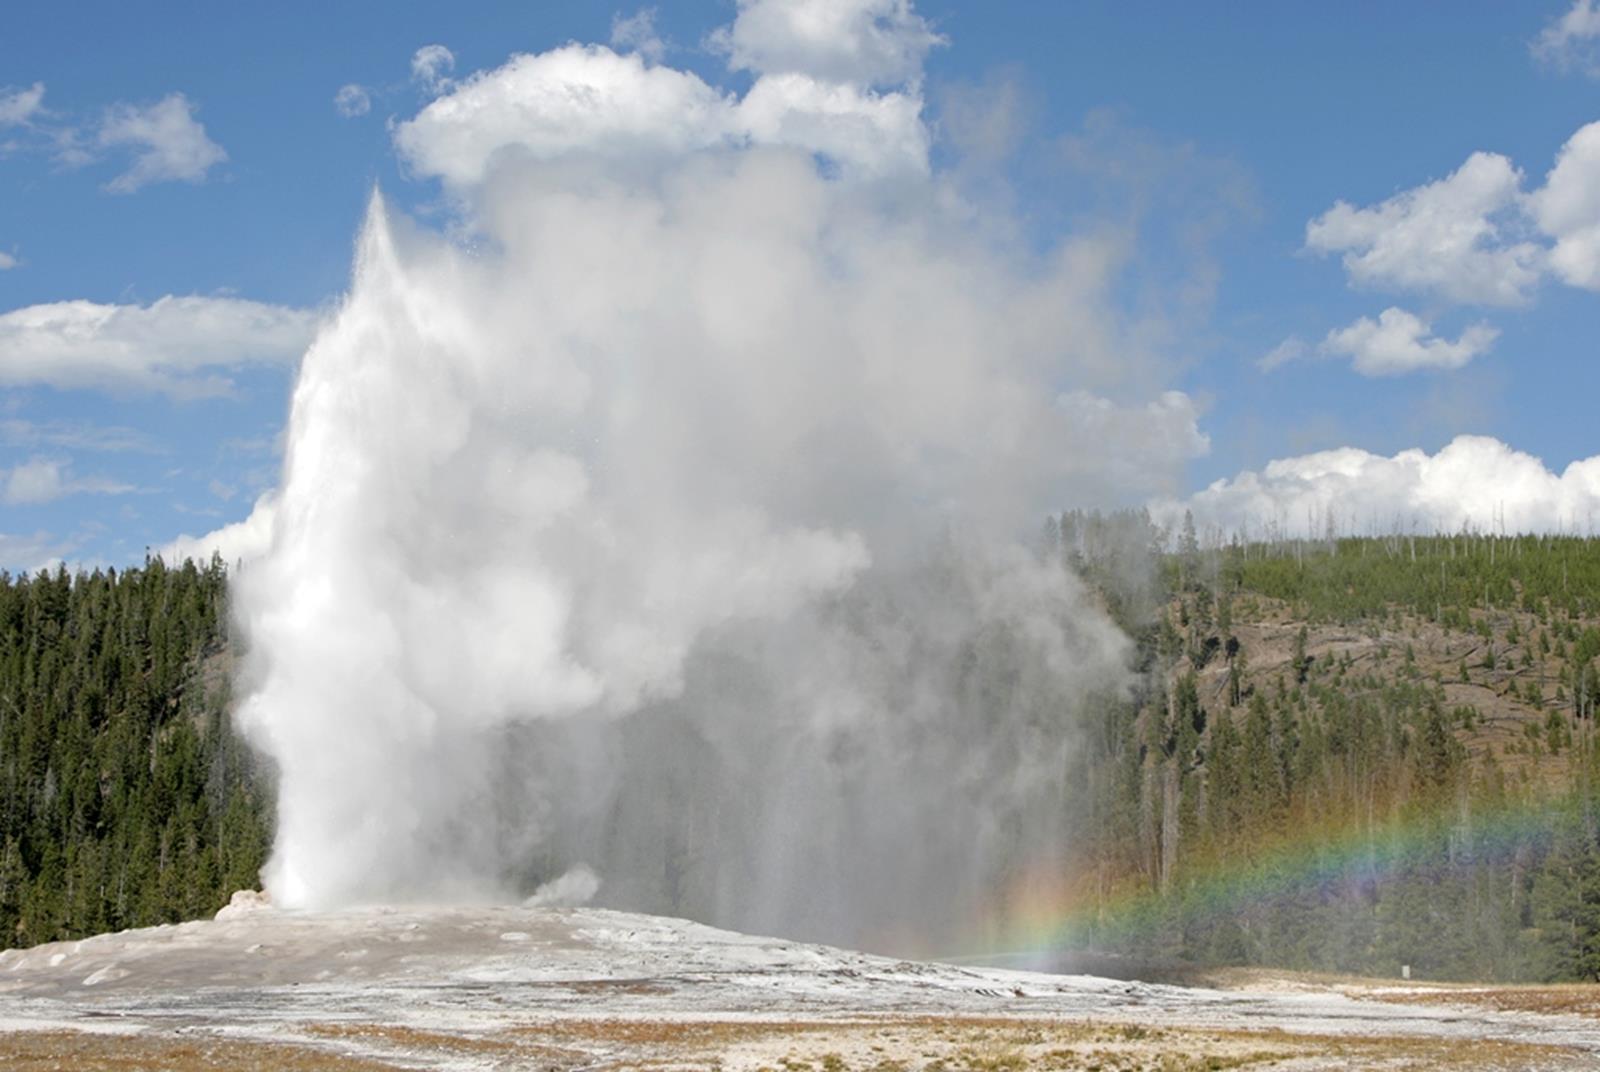 Old Faithful erupts at Yellowstone National Park. Credit: Wikipedia